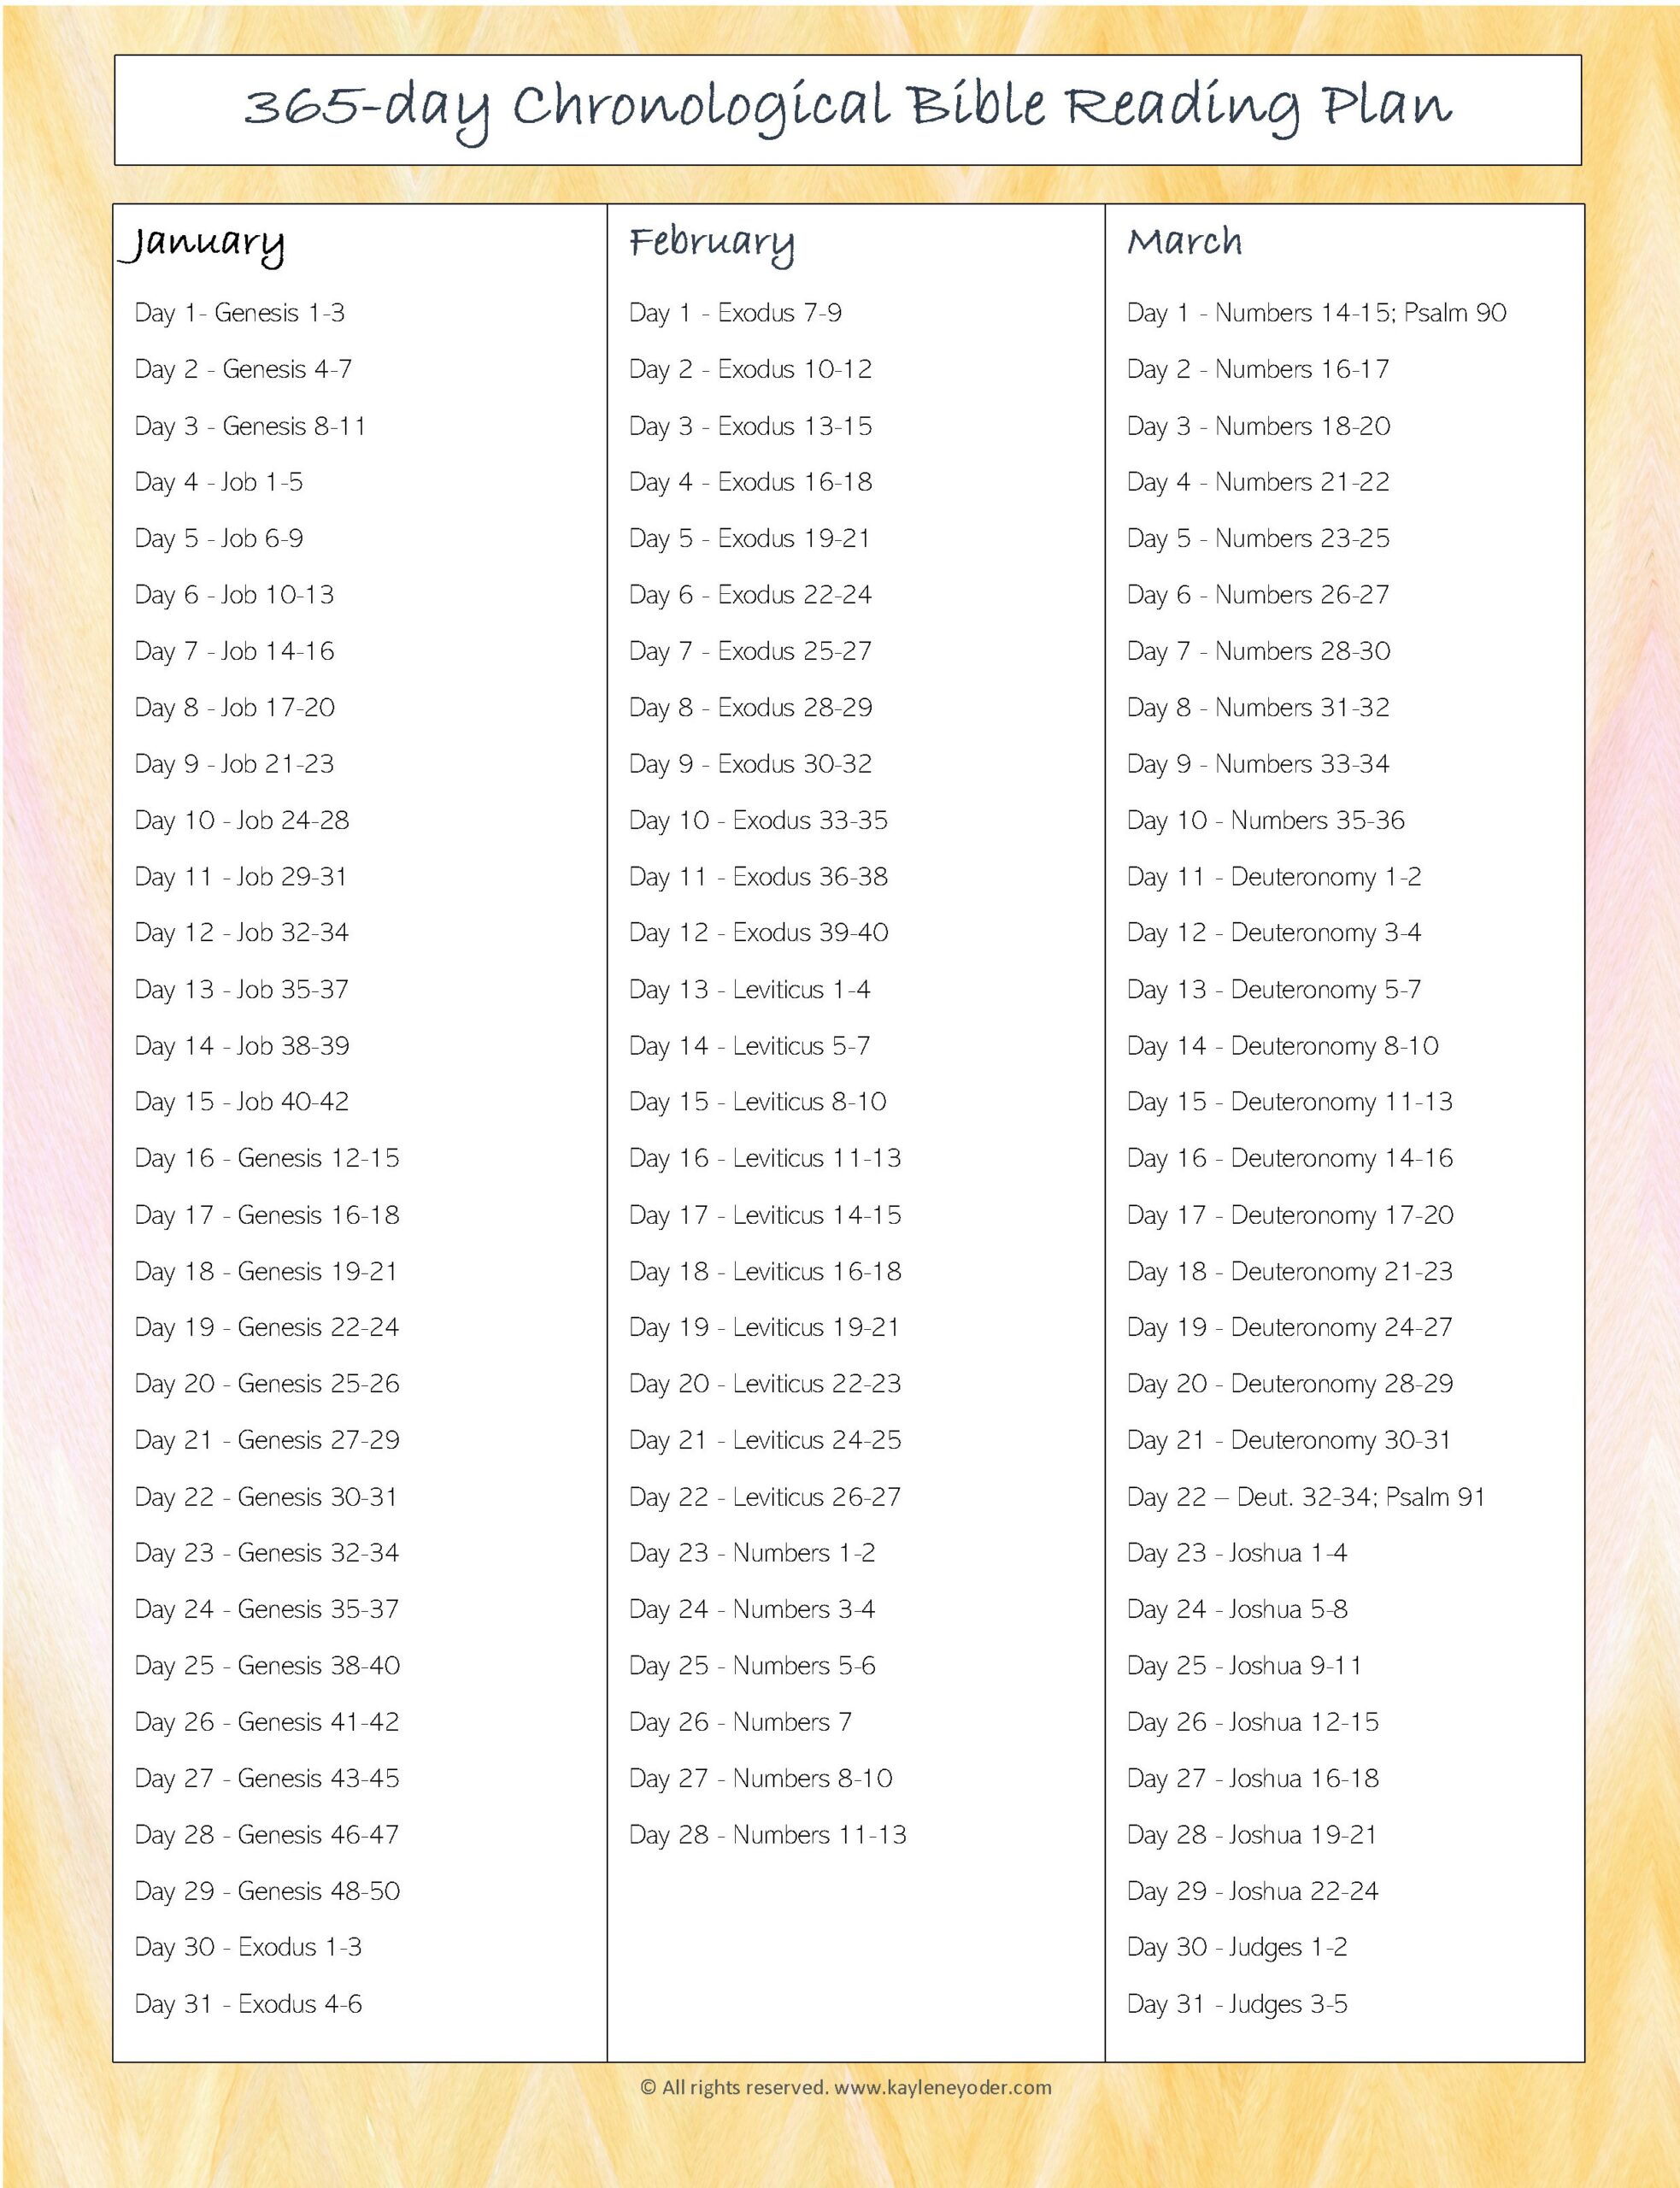 365-day-chronological-bible-reading-plan-kaylene-yoder